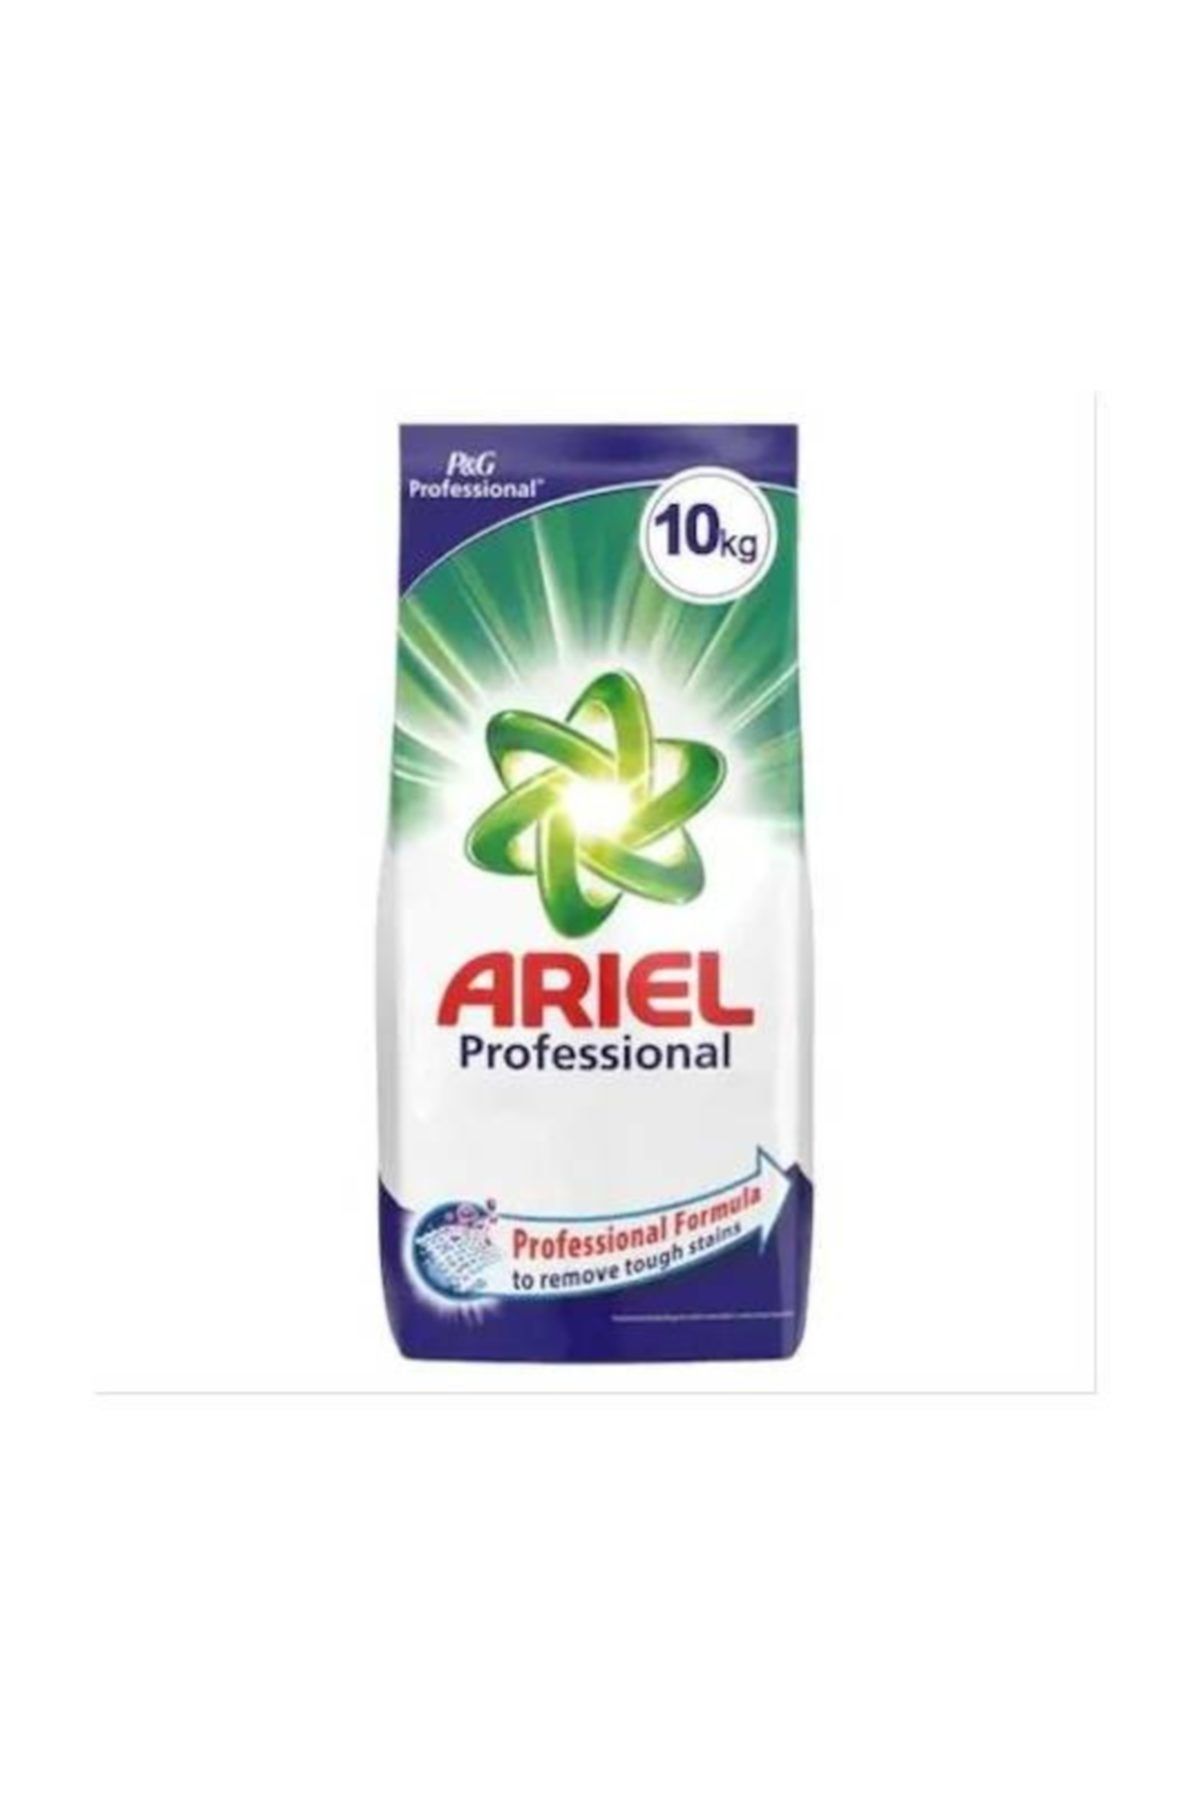 Ariel Professional 10kg